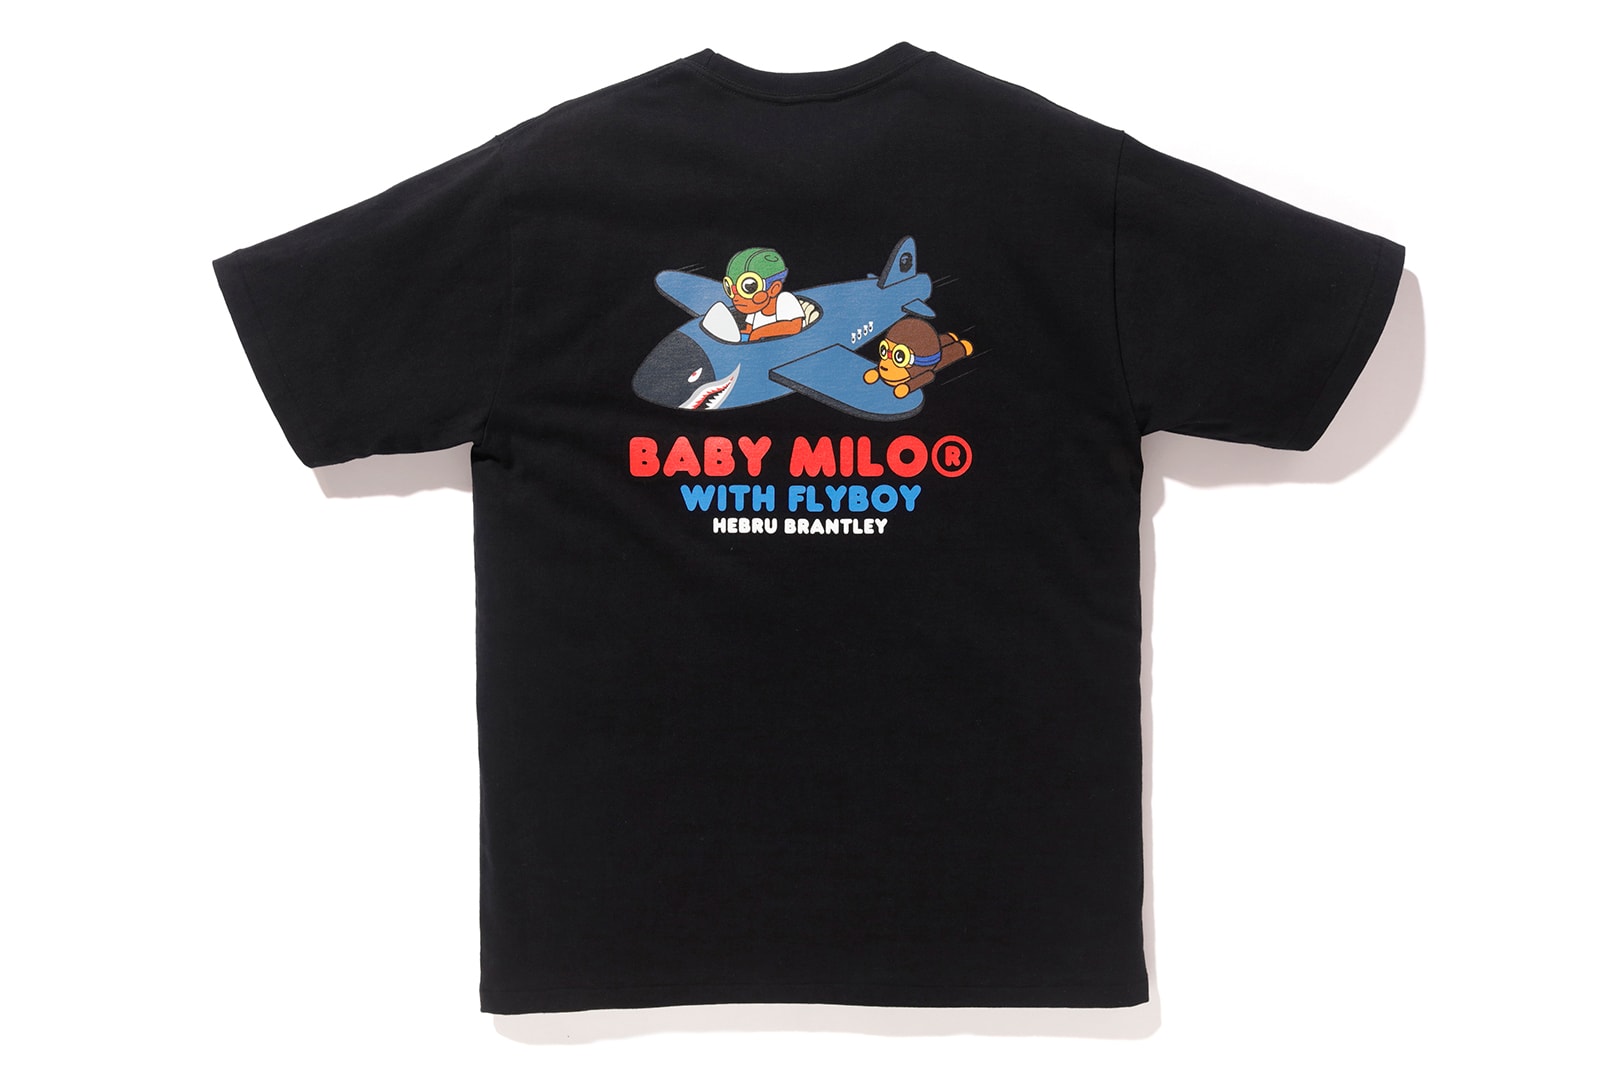 BAPE x Hebru Brantley Collaboration Collection Flyboy Baby Milo Lil Momma Shark Hoodie T-shirt Ape Head Tee Release Details Social Status Los Angeles